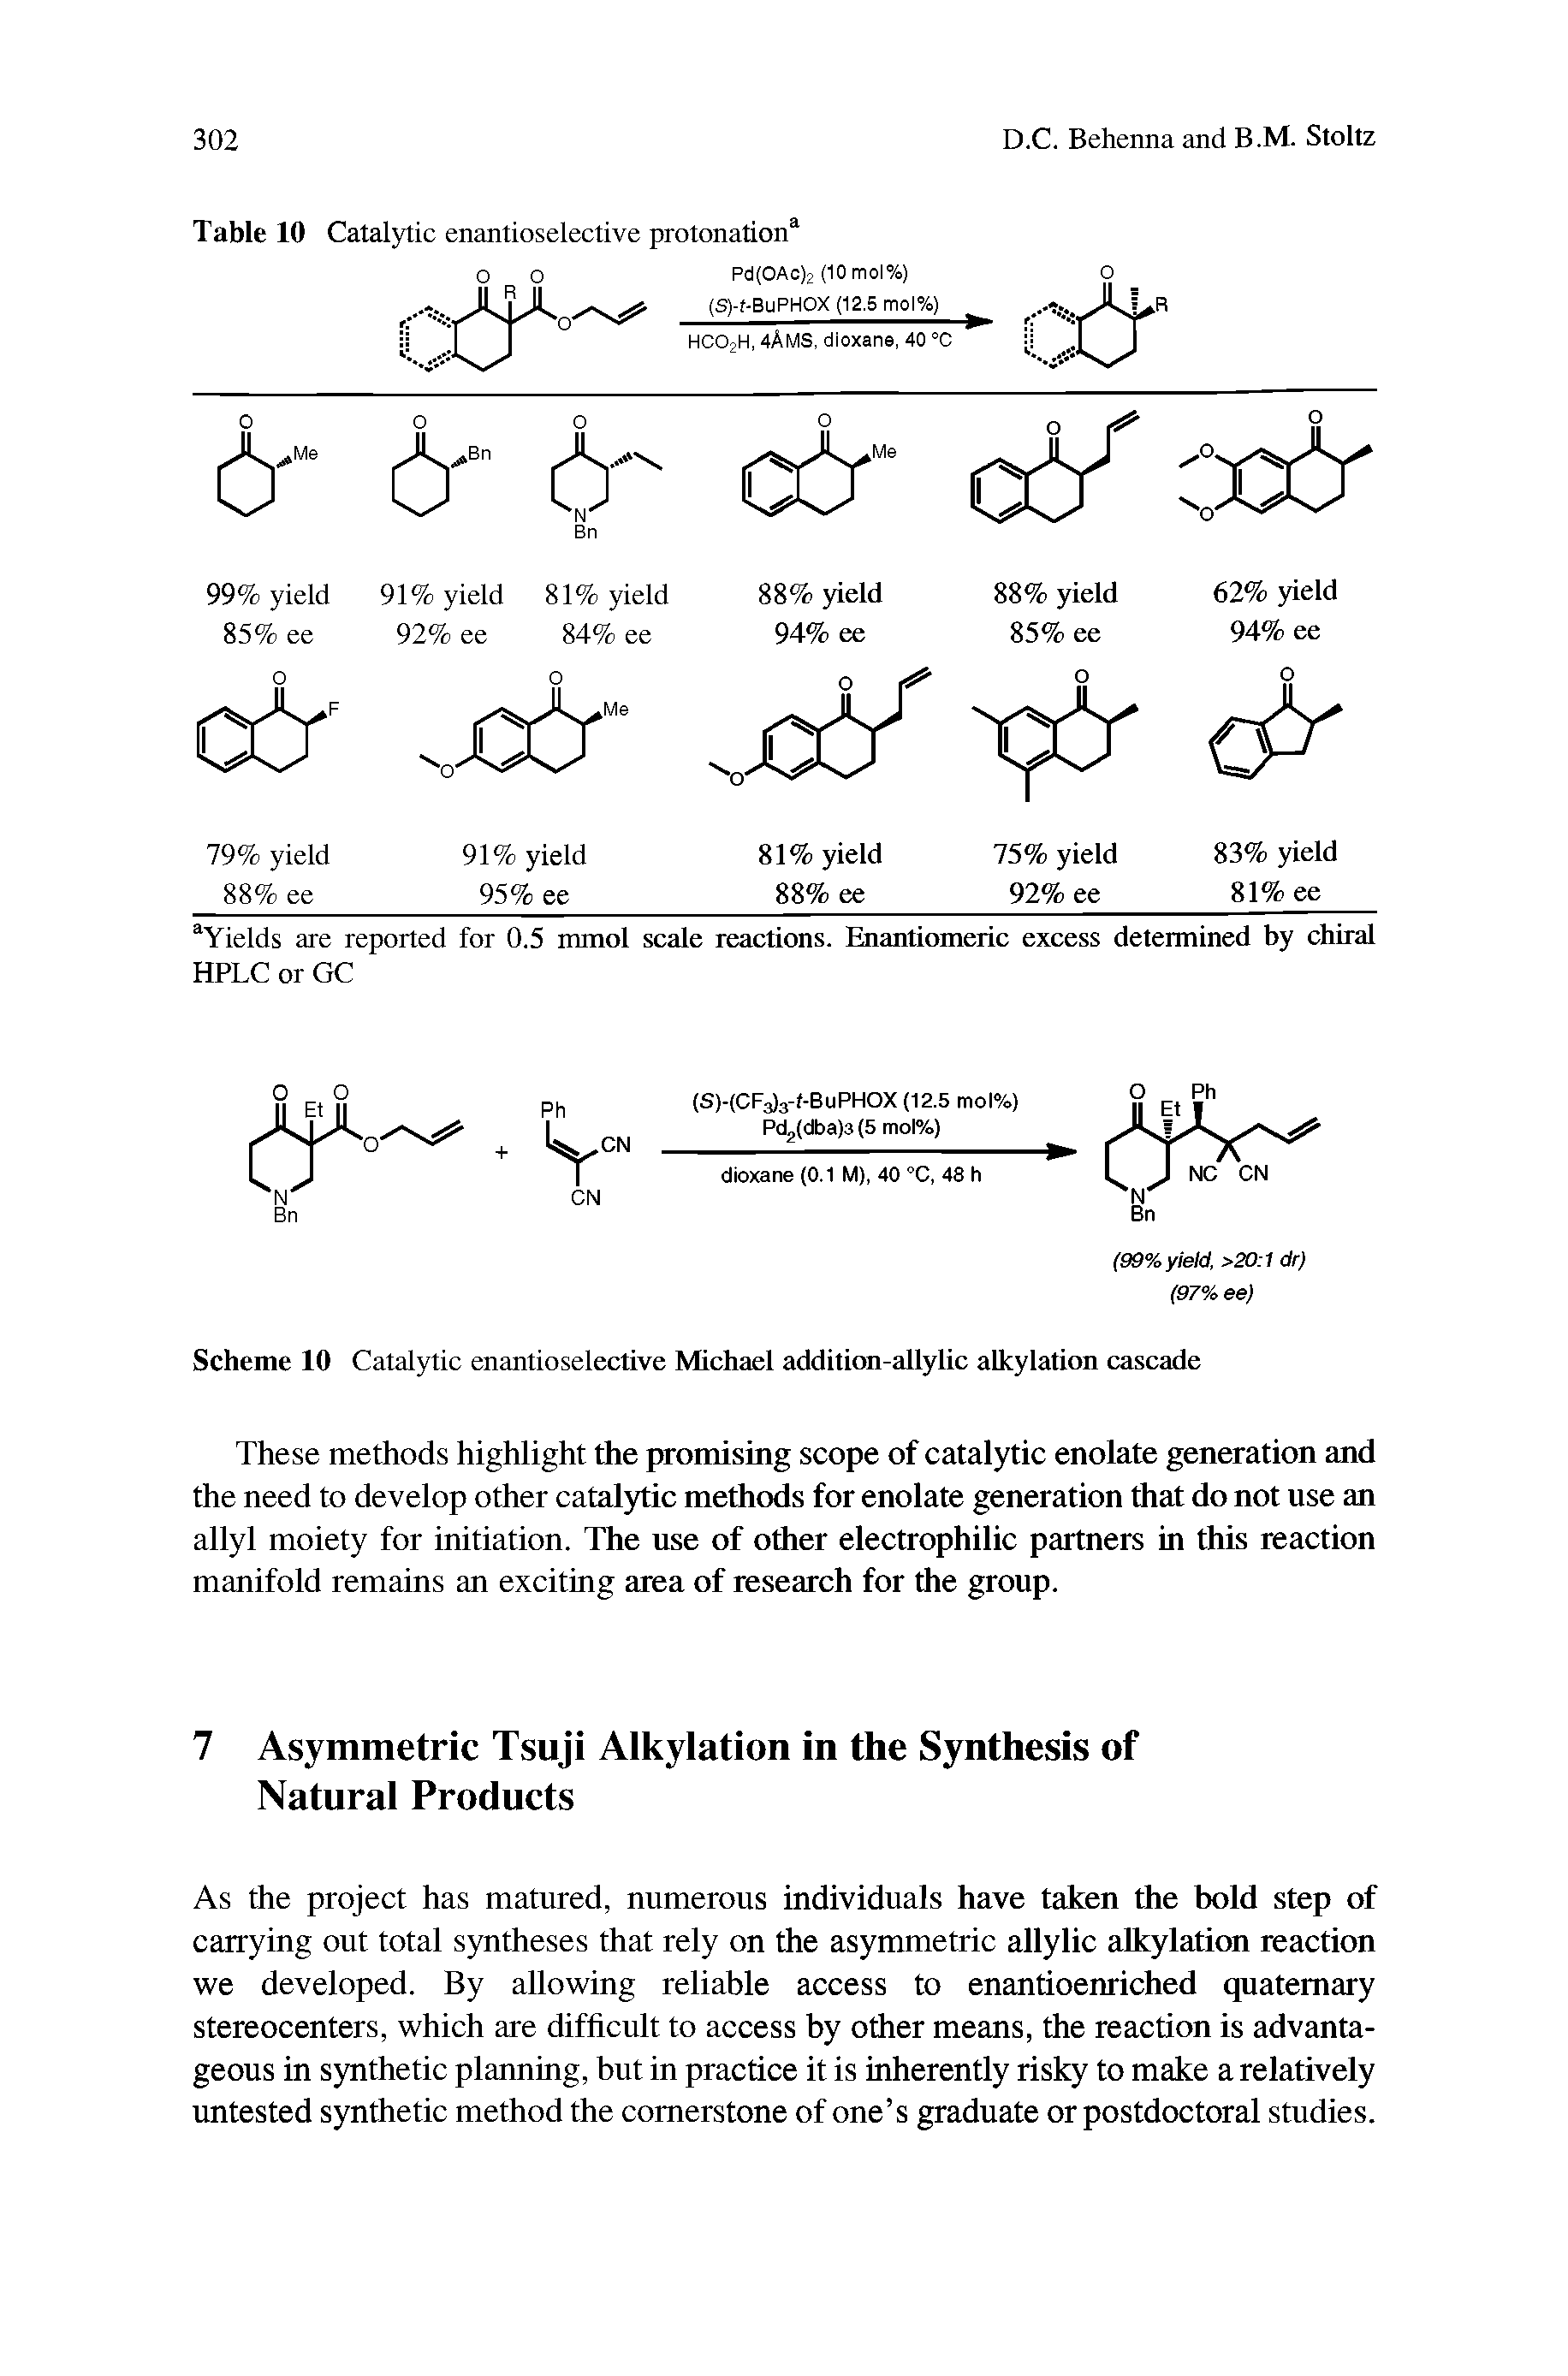 Scheme 10 Catalytic enantioselective Michael addition-allylic alkylation cascade...